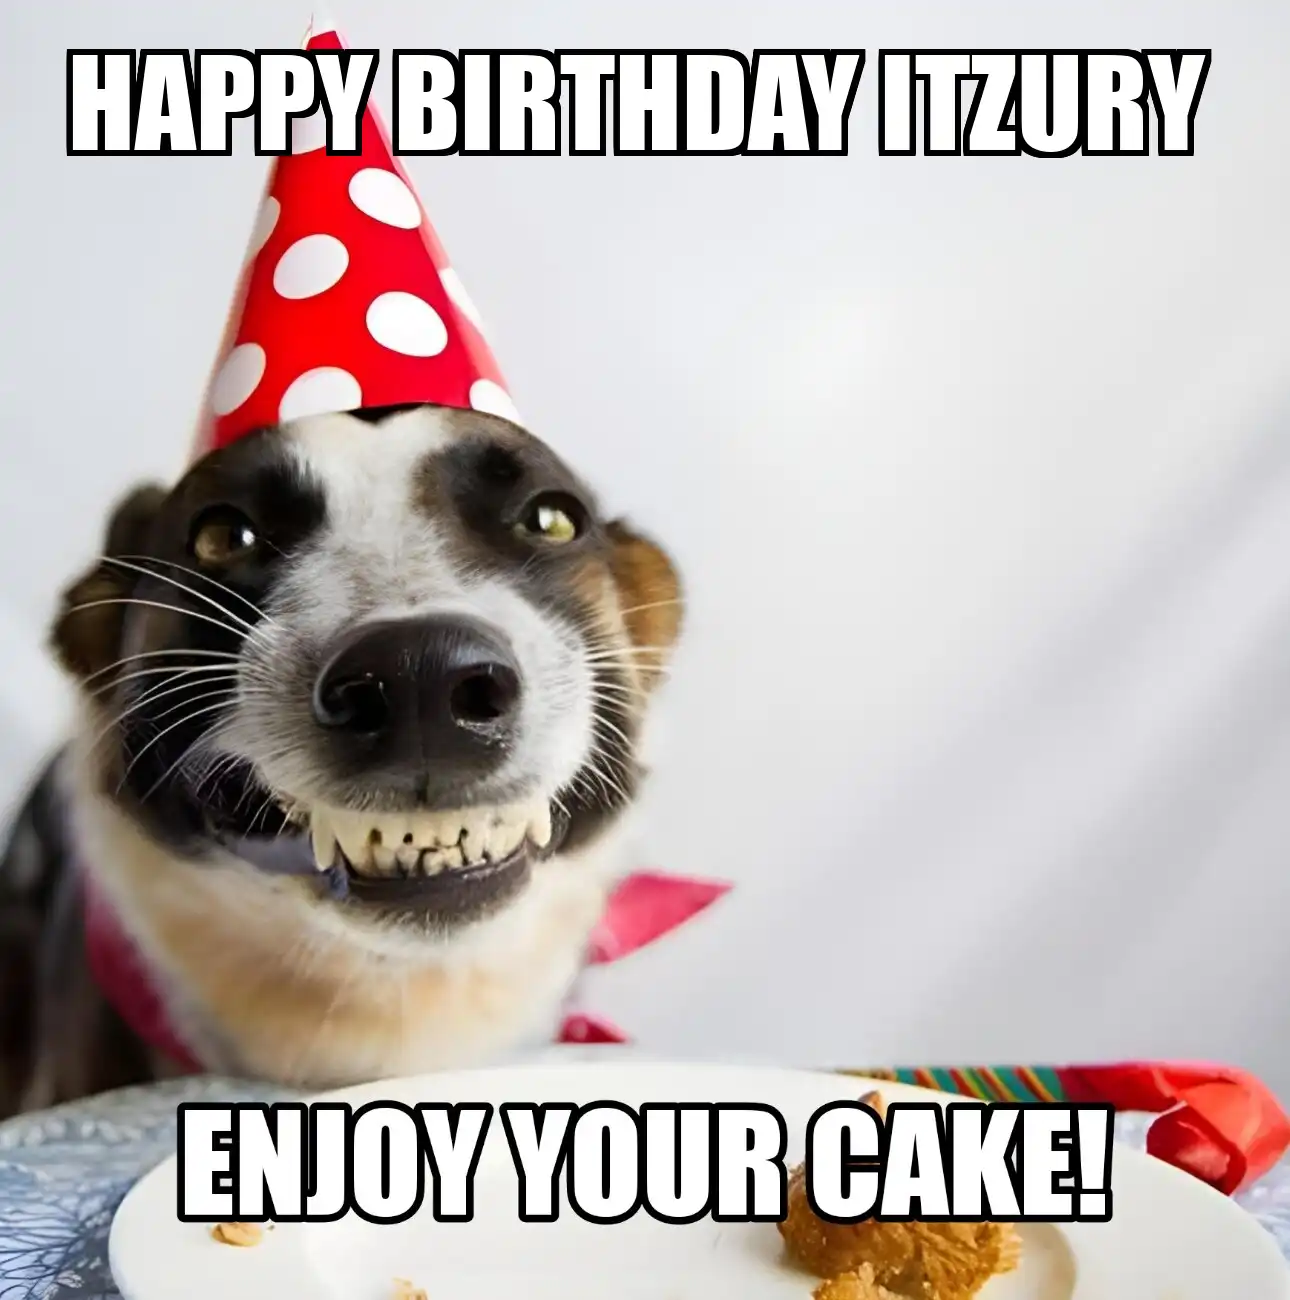 Happy Birthday Itzury Enjoy Your Cake Dog Meme